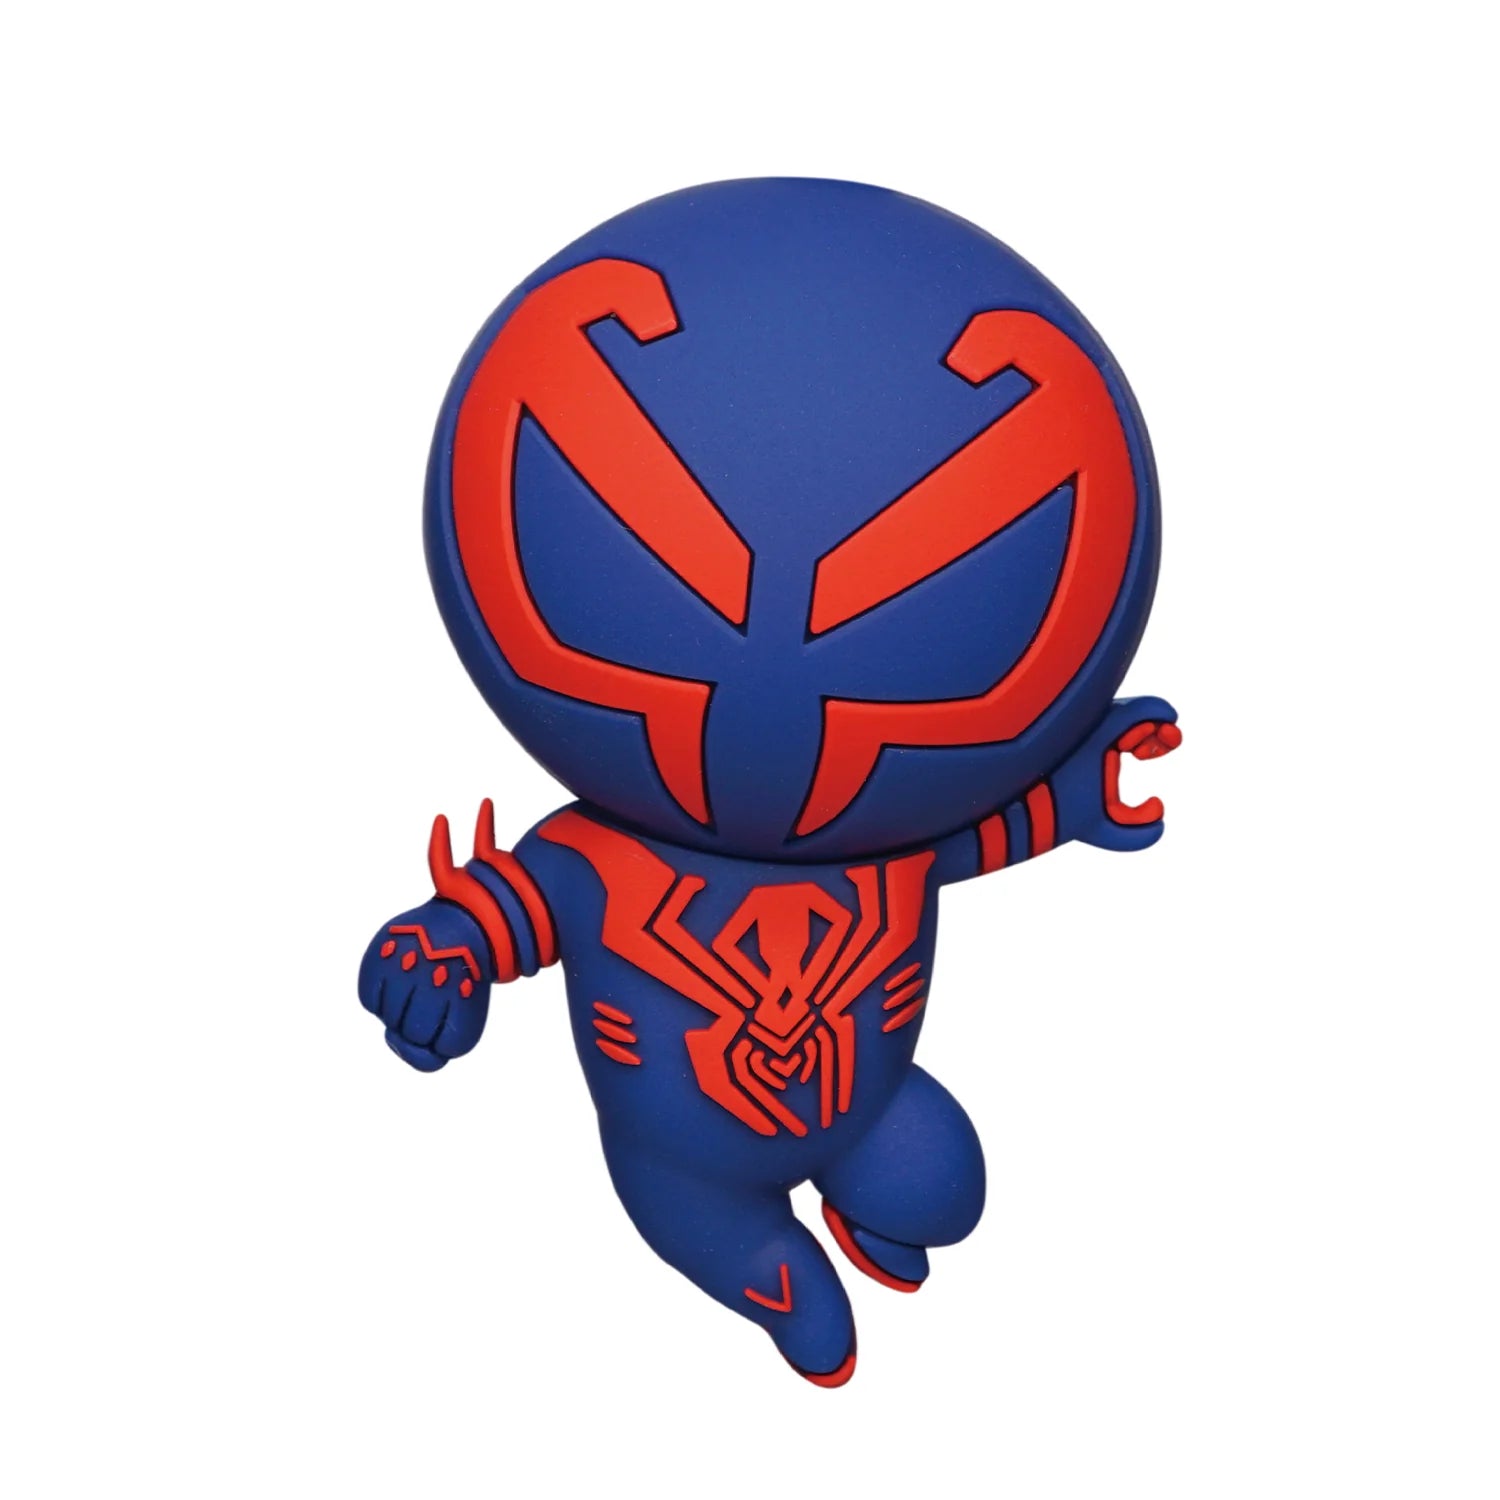 Monogram Iman 3D: SpiderVerse - Spiderman 2099